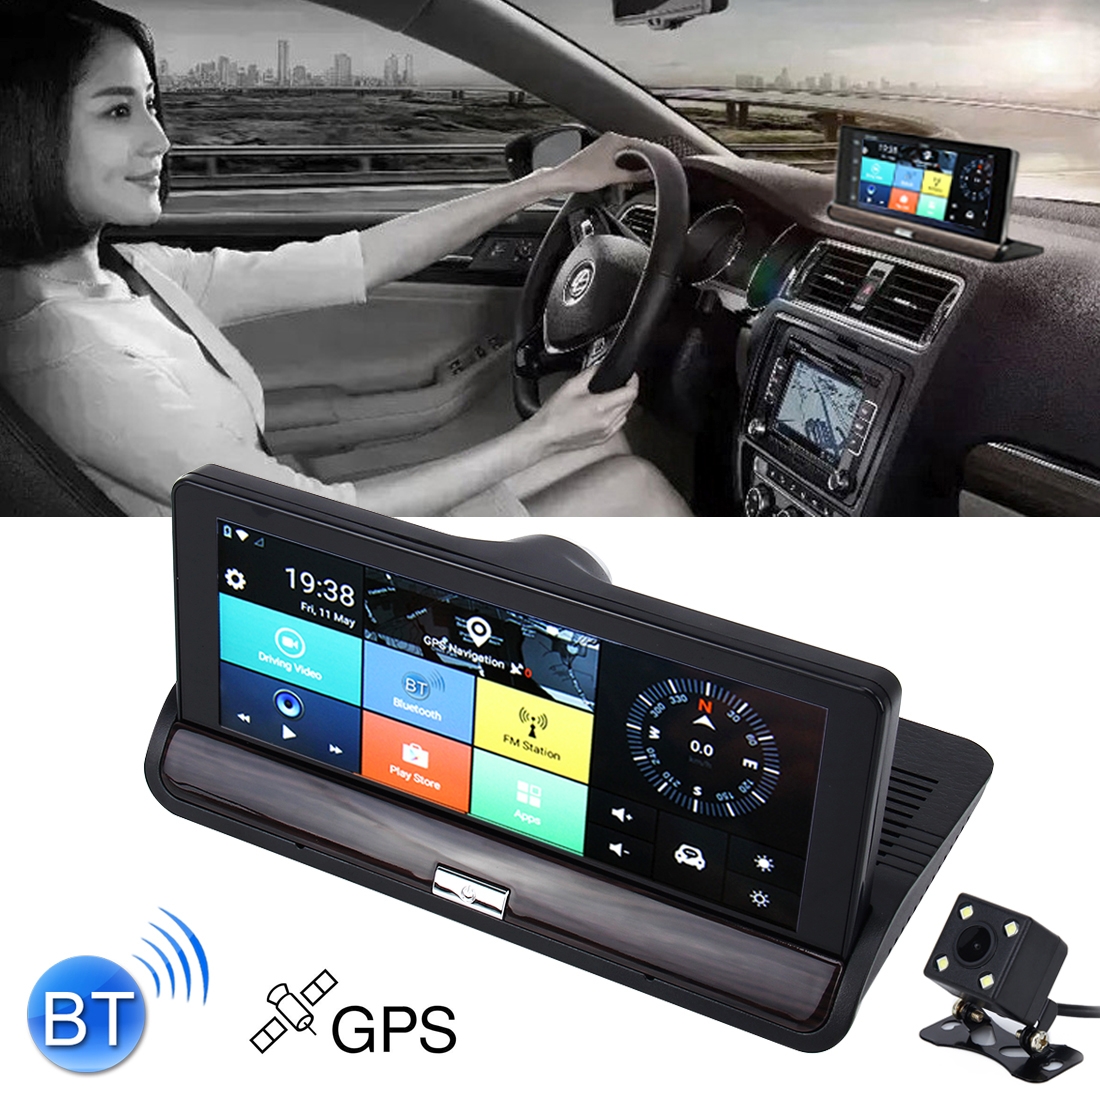 7 inch Car DVR Rearview Mirror Dual Camera WiFi GPS Driving Video Recorder Bluetooth Hands-free Car Dash Cam